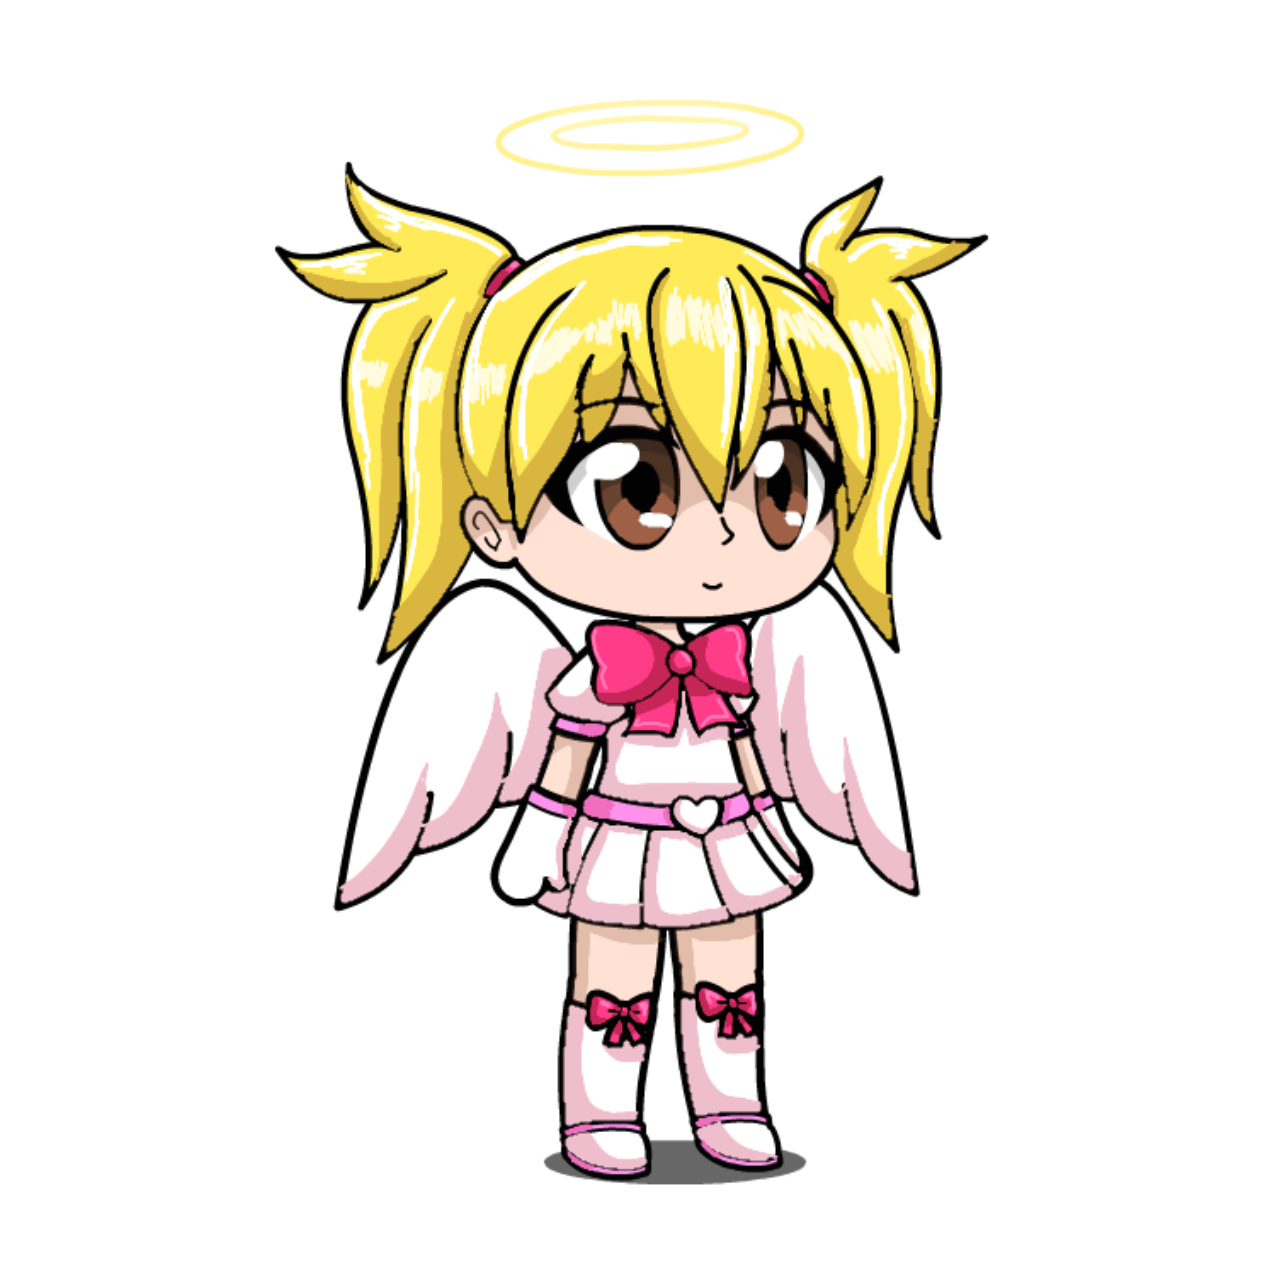 Shikira 1st Angel form by NezukoRempaDeviart07 on DeviantArt